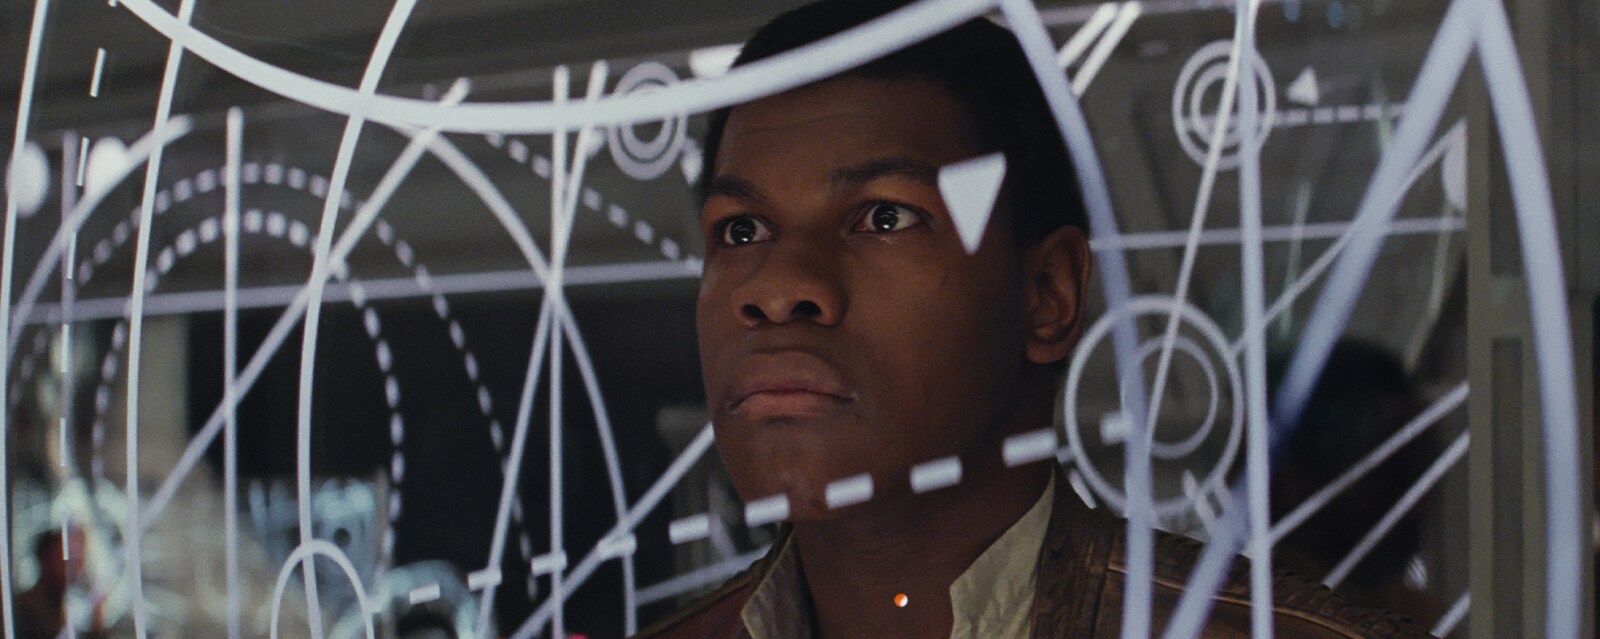 Finn in "The Last Jedi"